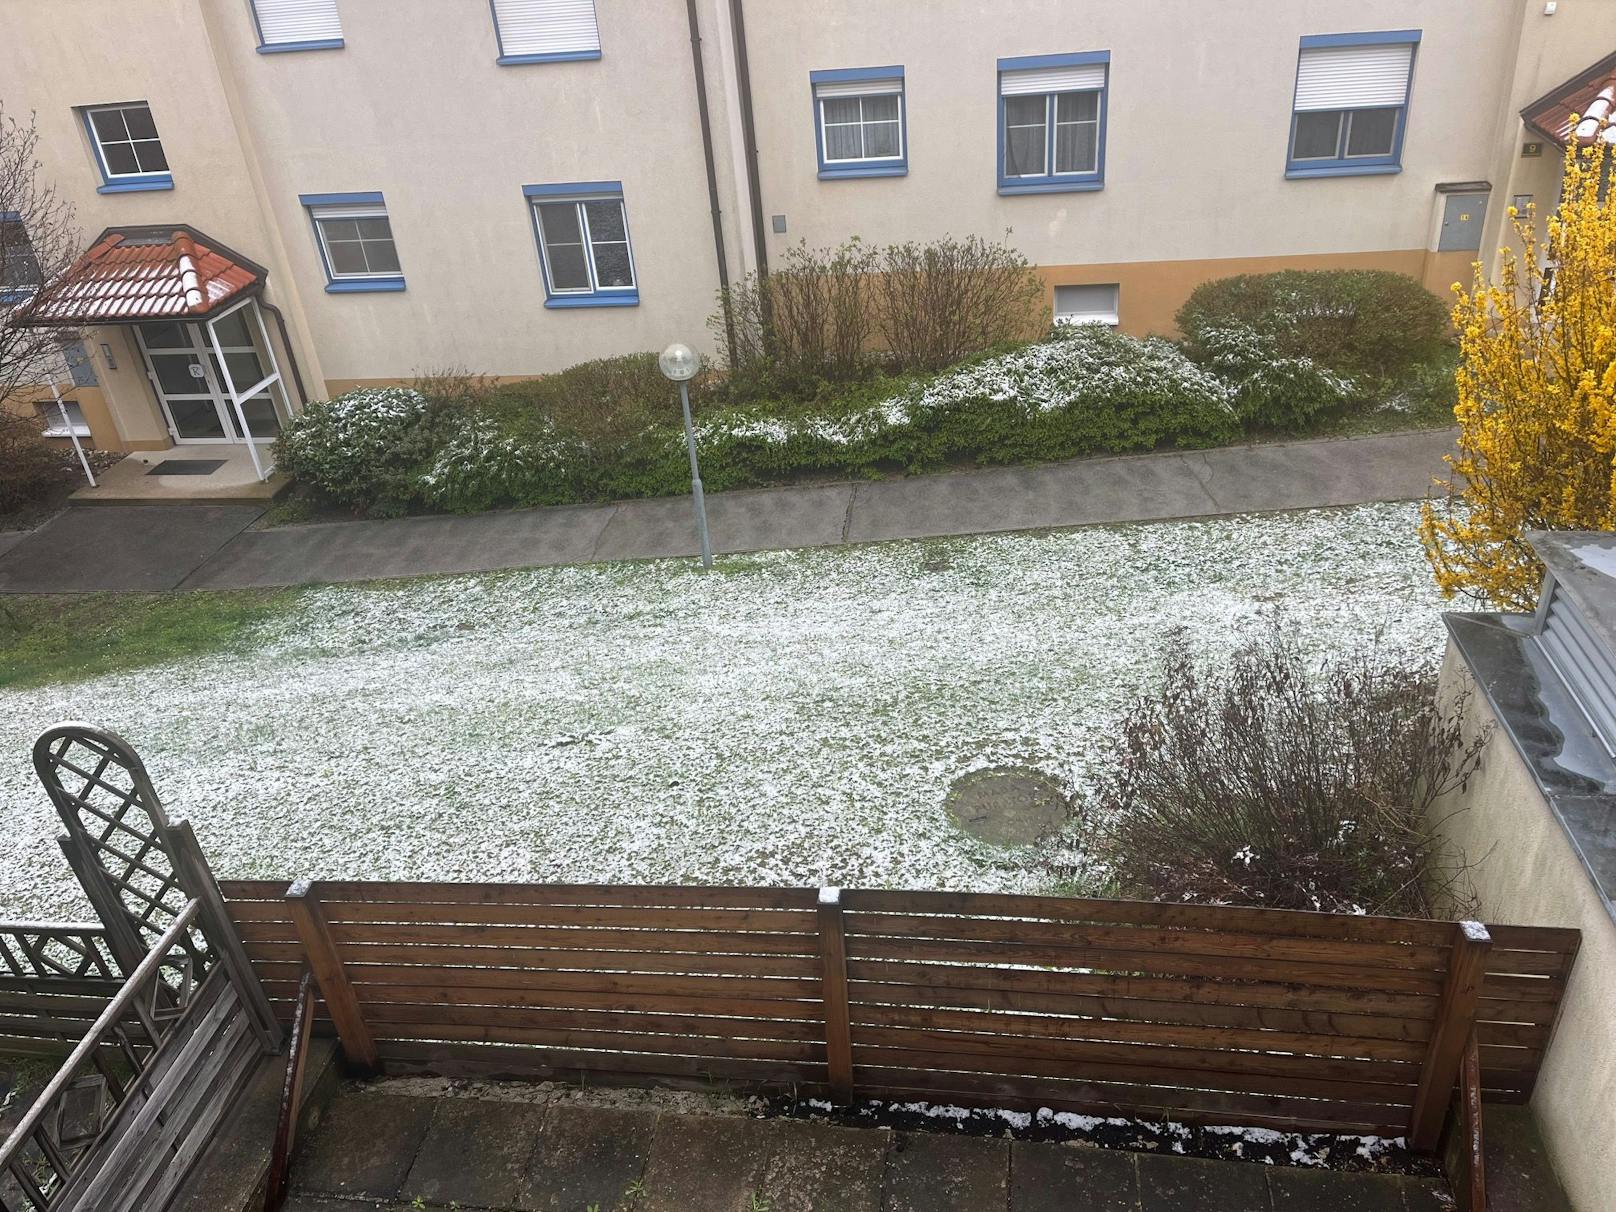 Schnee in Mistelbach am Samstagvormittag, 8. April